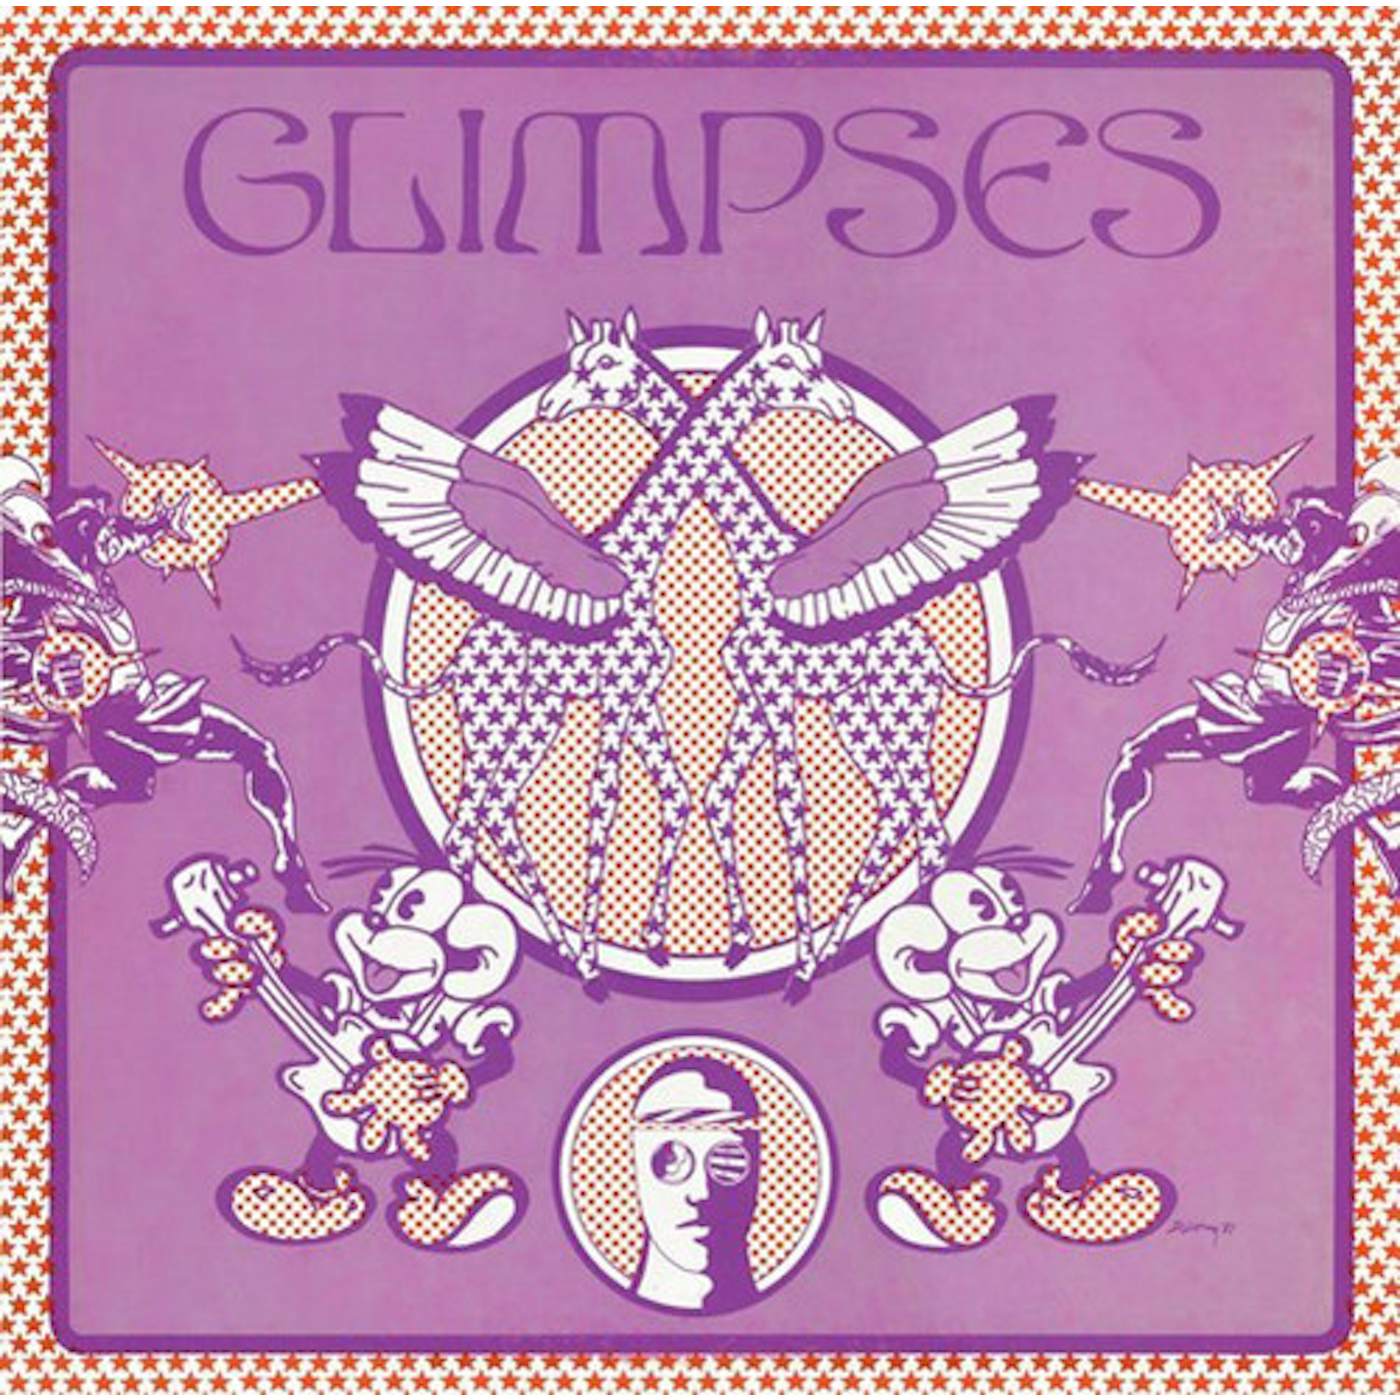 GLIMPSES 1 / VARIOUS Vinyl Record